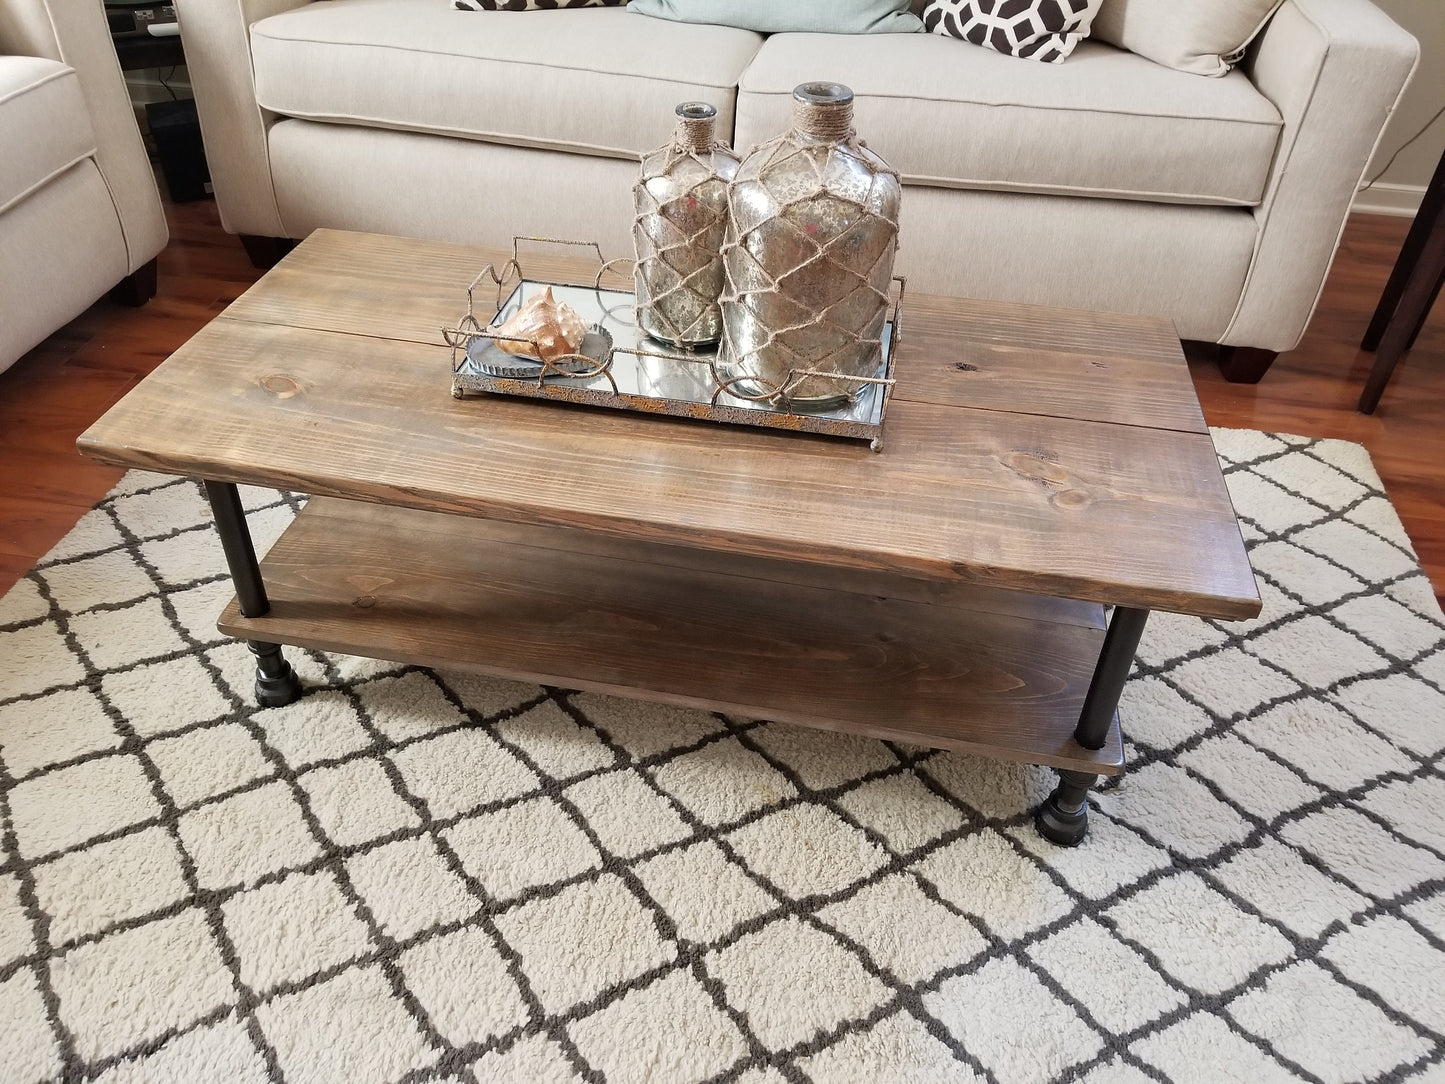 Steel and Wood Custom Edge Coffee Table with Shelf - Large Pipe